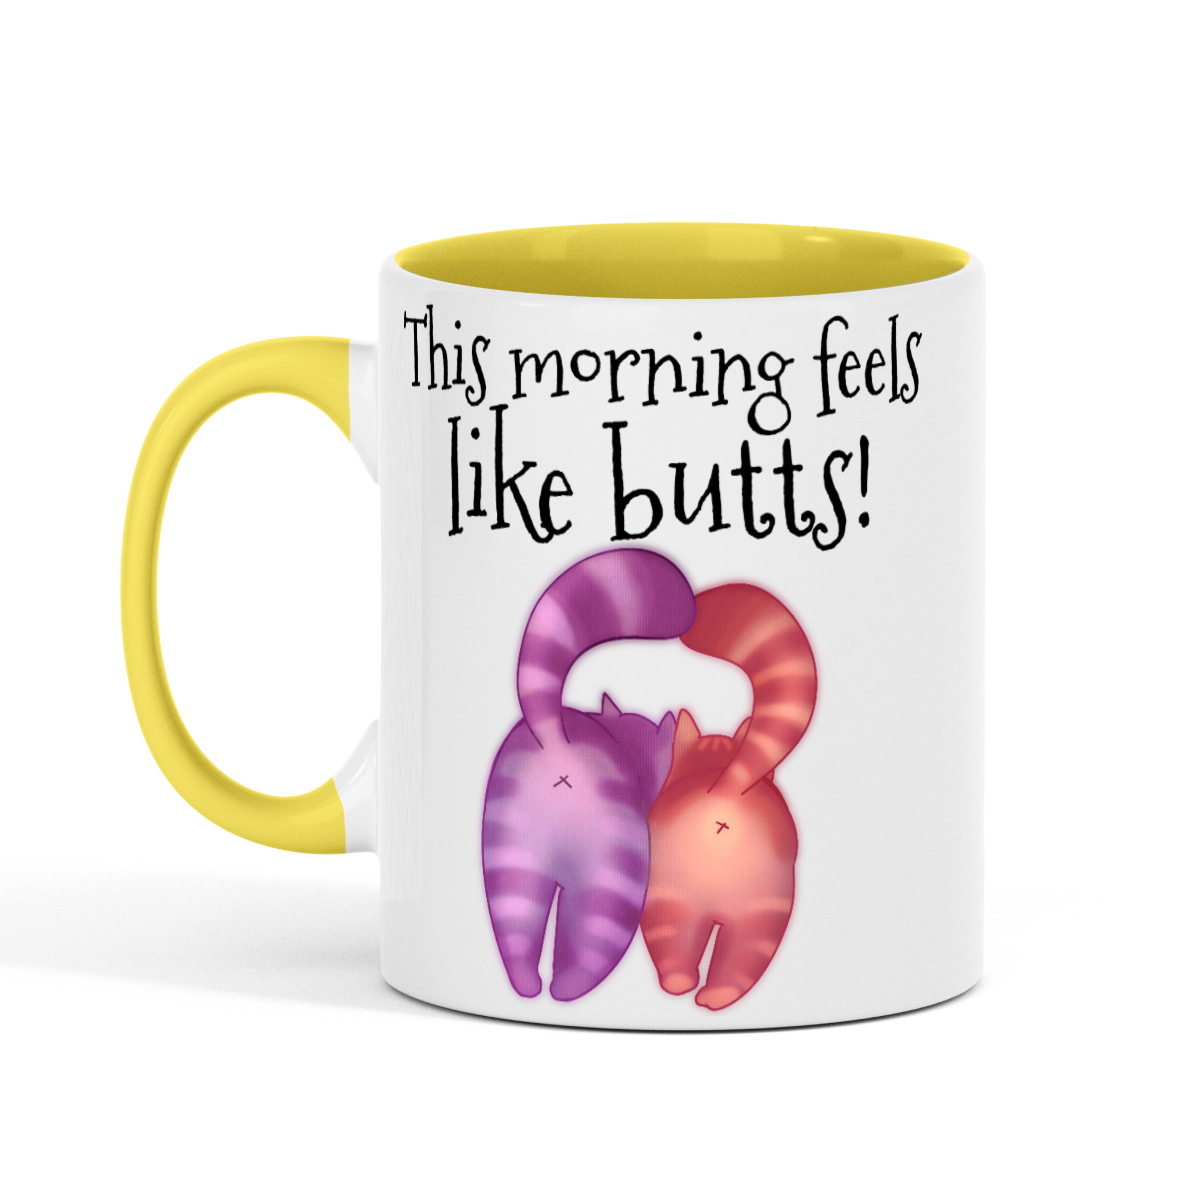 This morning feels like butts! 11 oz Mug